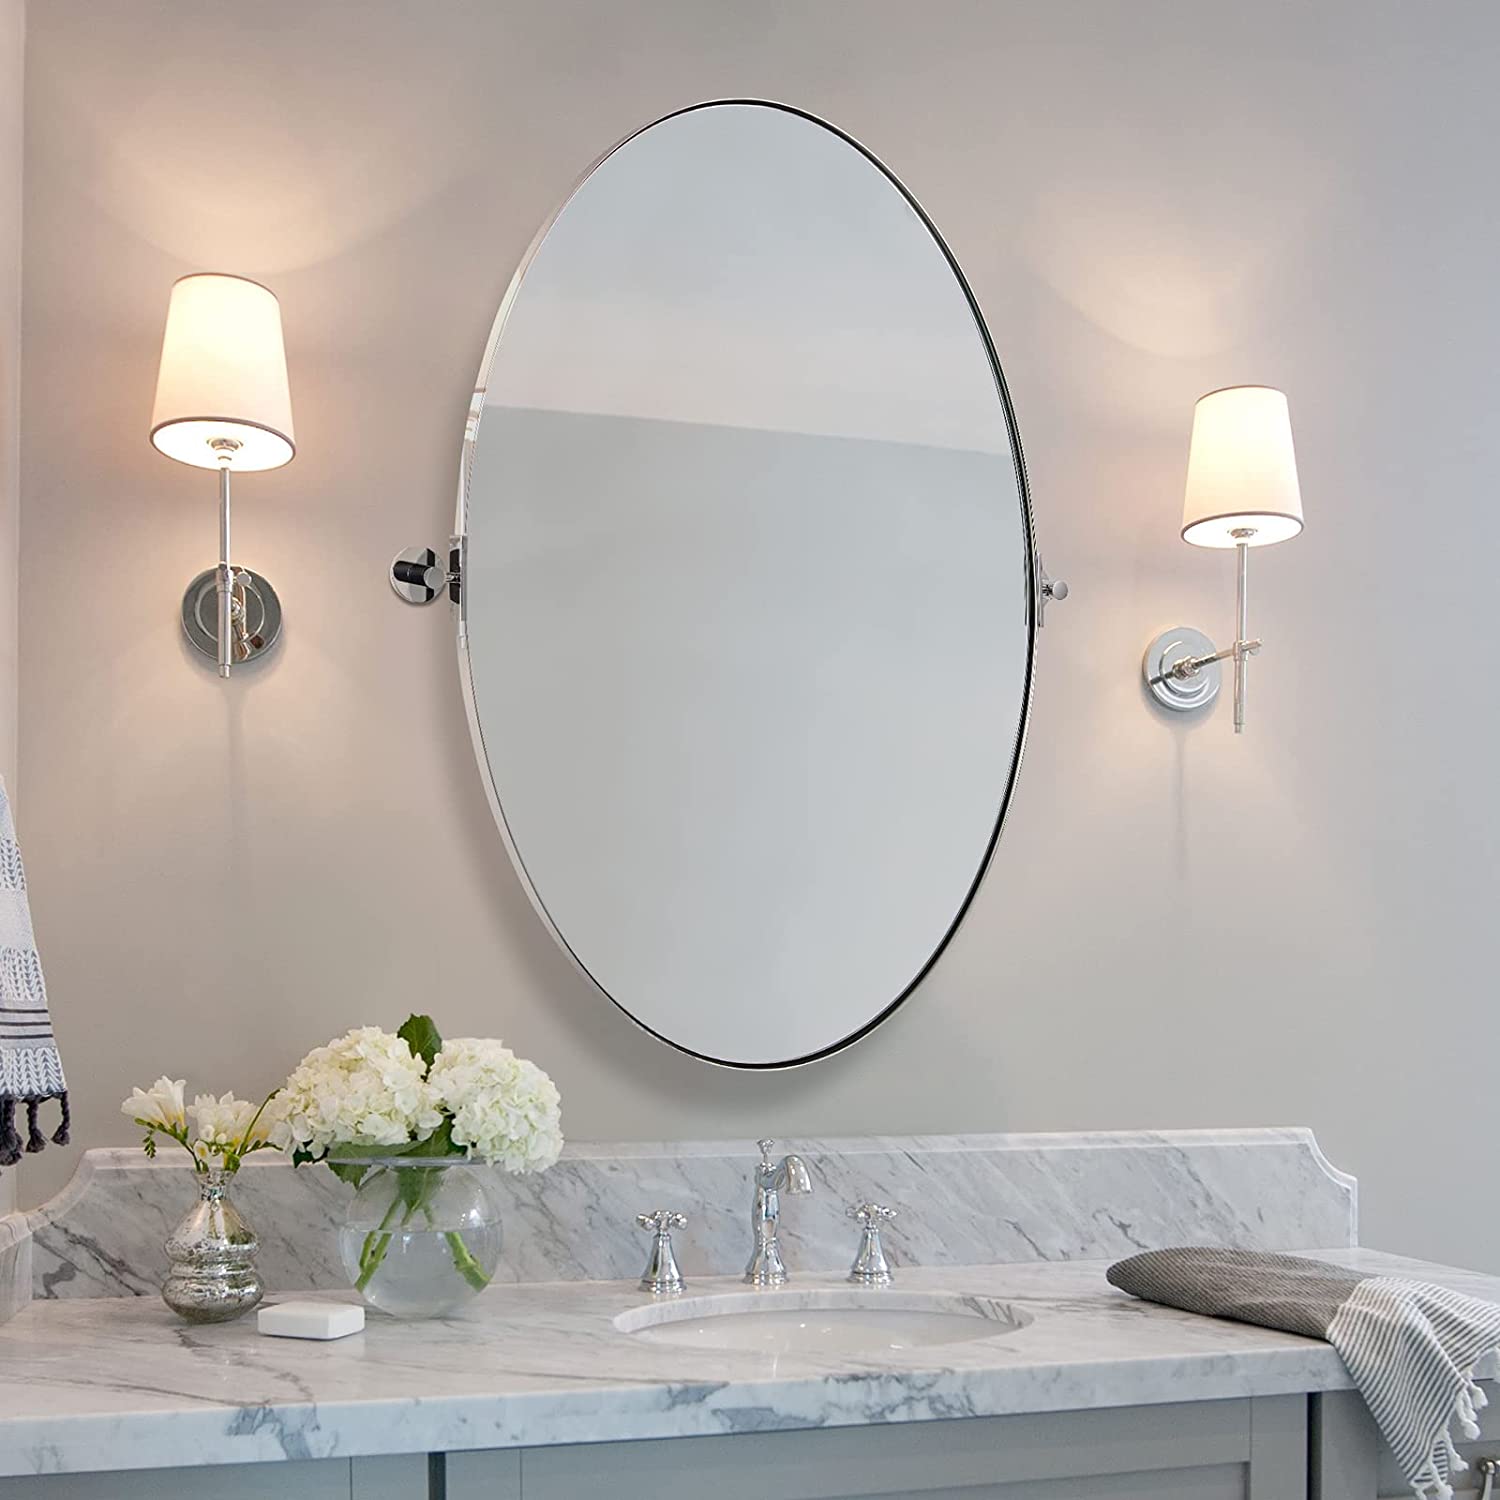 Modern Oval Pivot Mirror Adjustable Swivel Tilt Bathroom Oval Wall Mirror Stainless Steel Frame#color_polished chrome